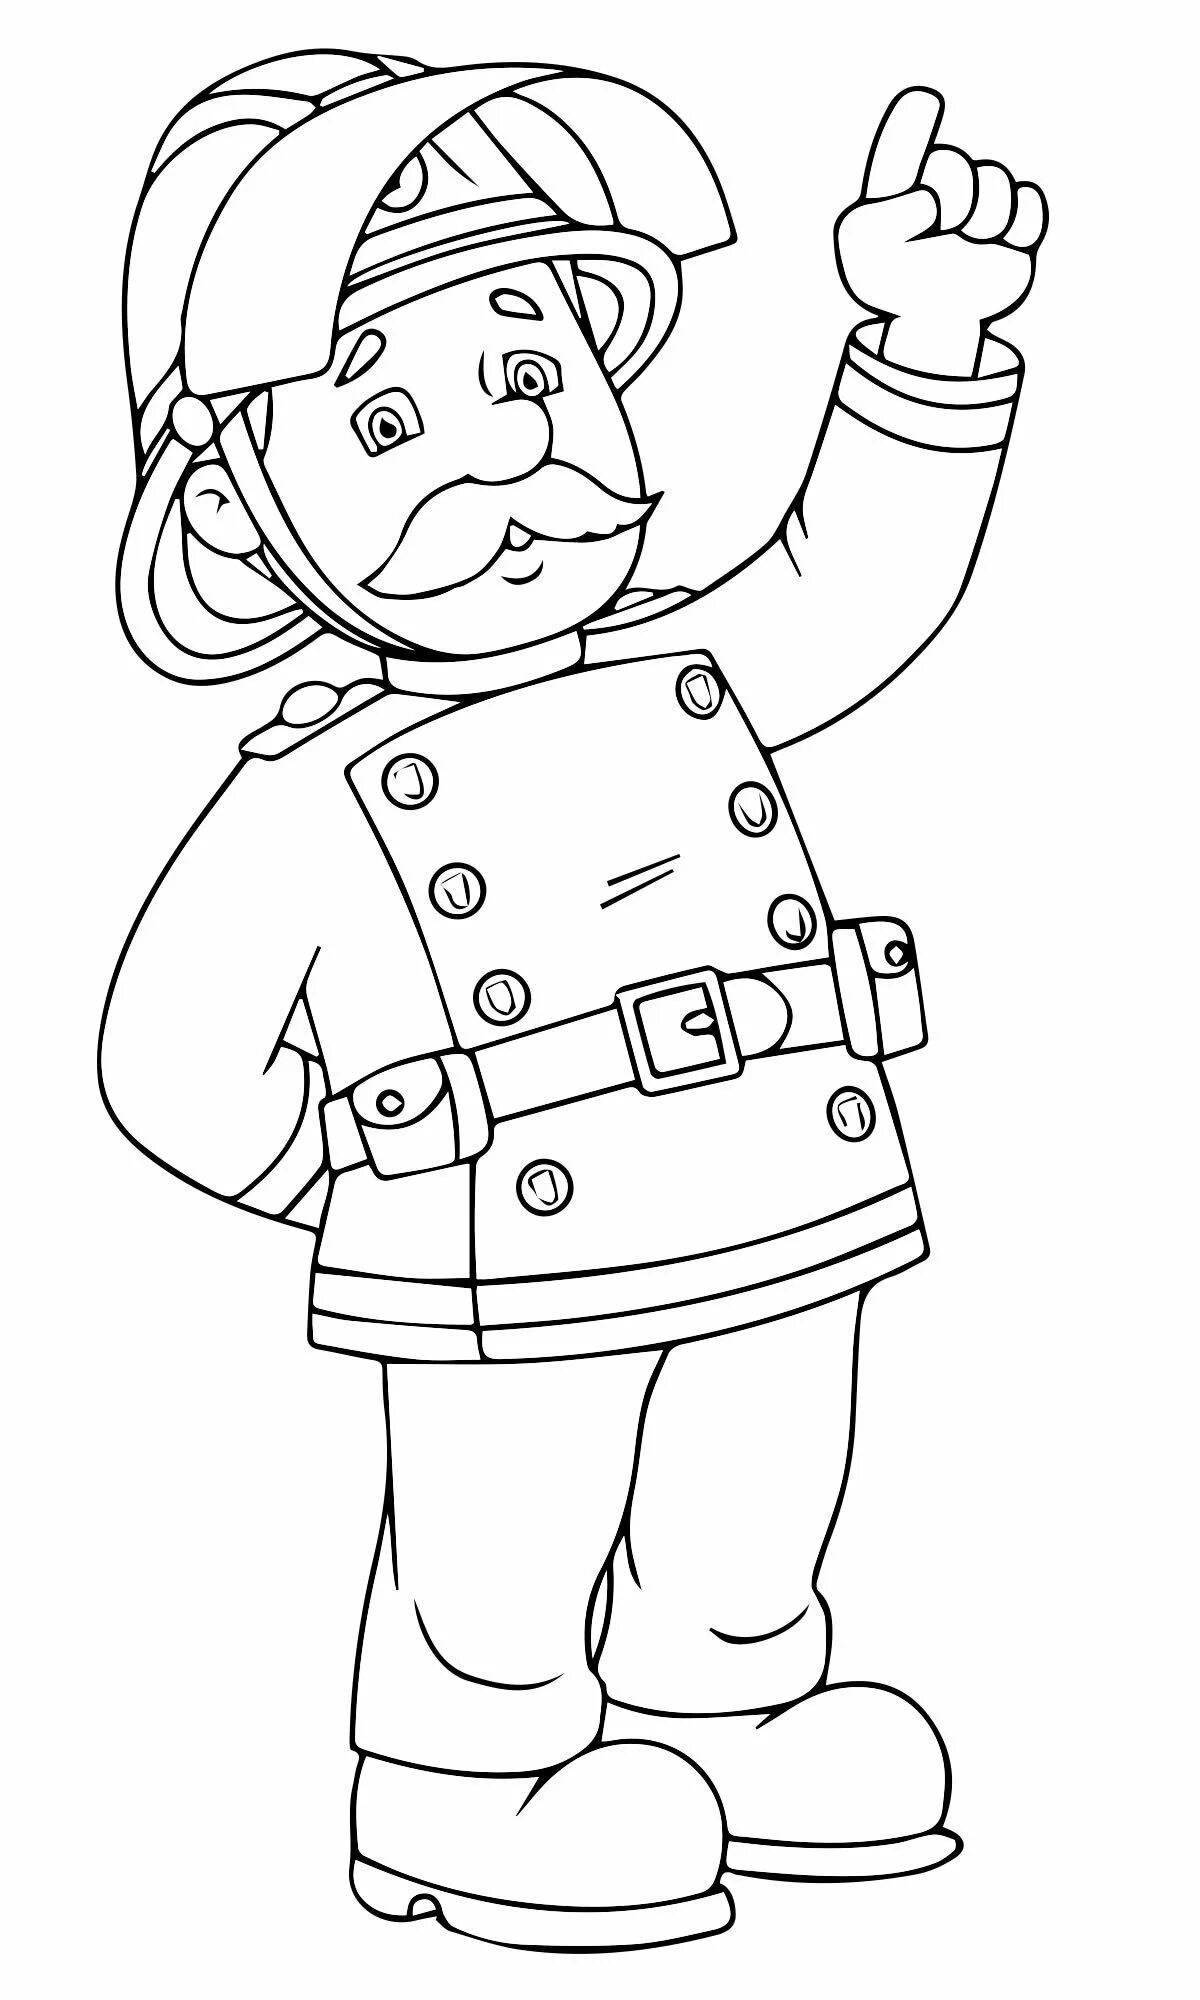 Joyful drawing of a firefighter for children